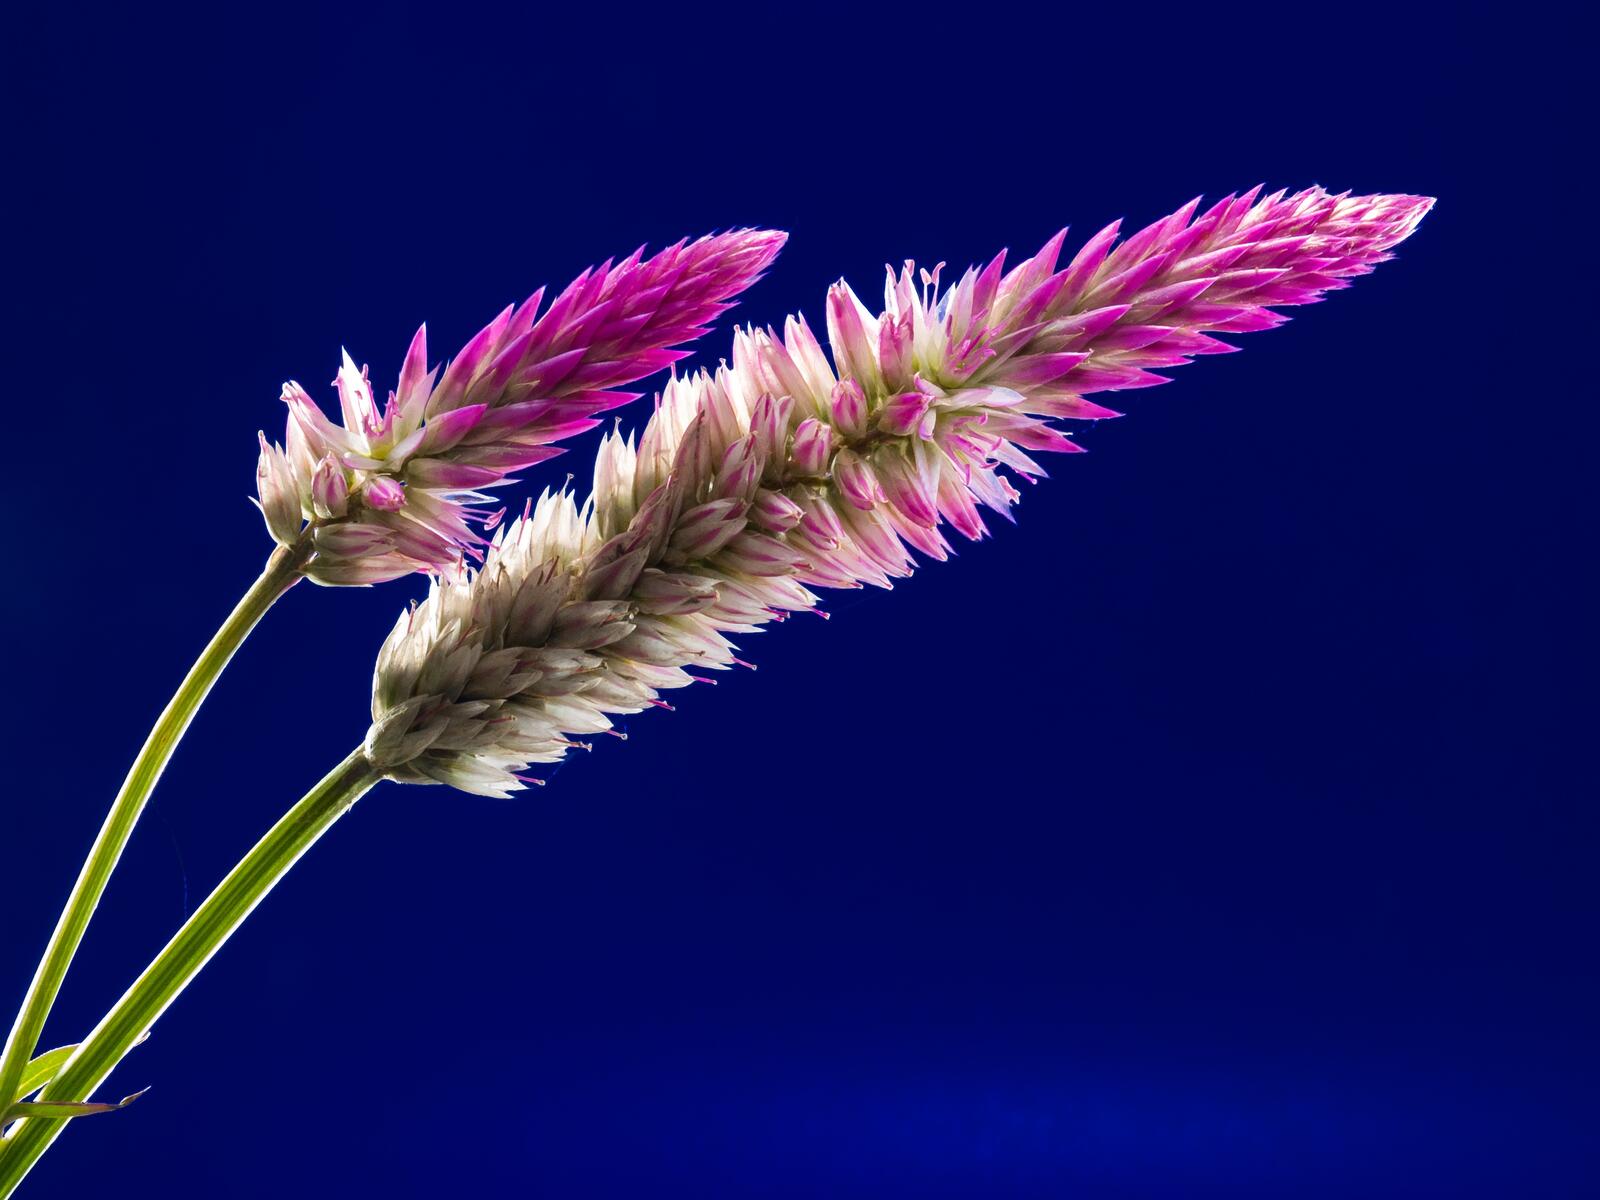 Бесплатное фото Дикий цветок розового цвета на краях